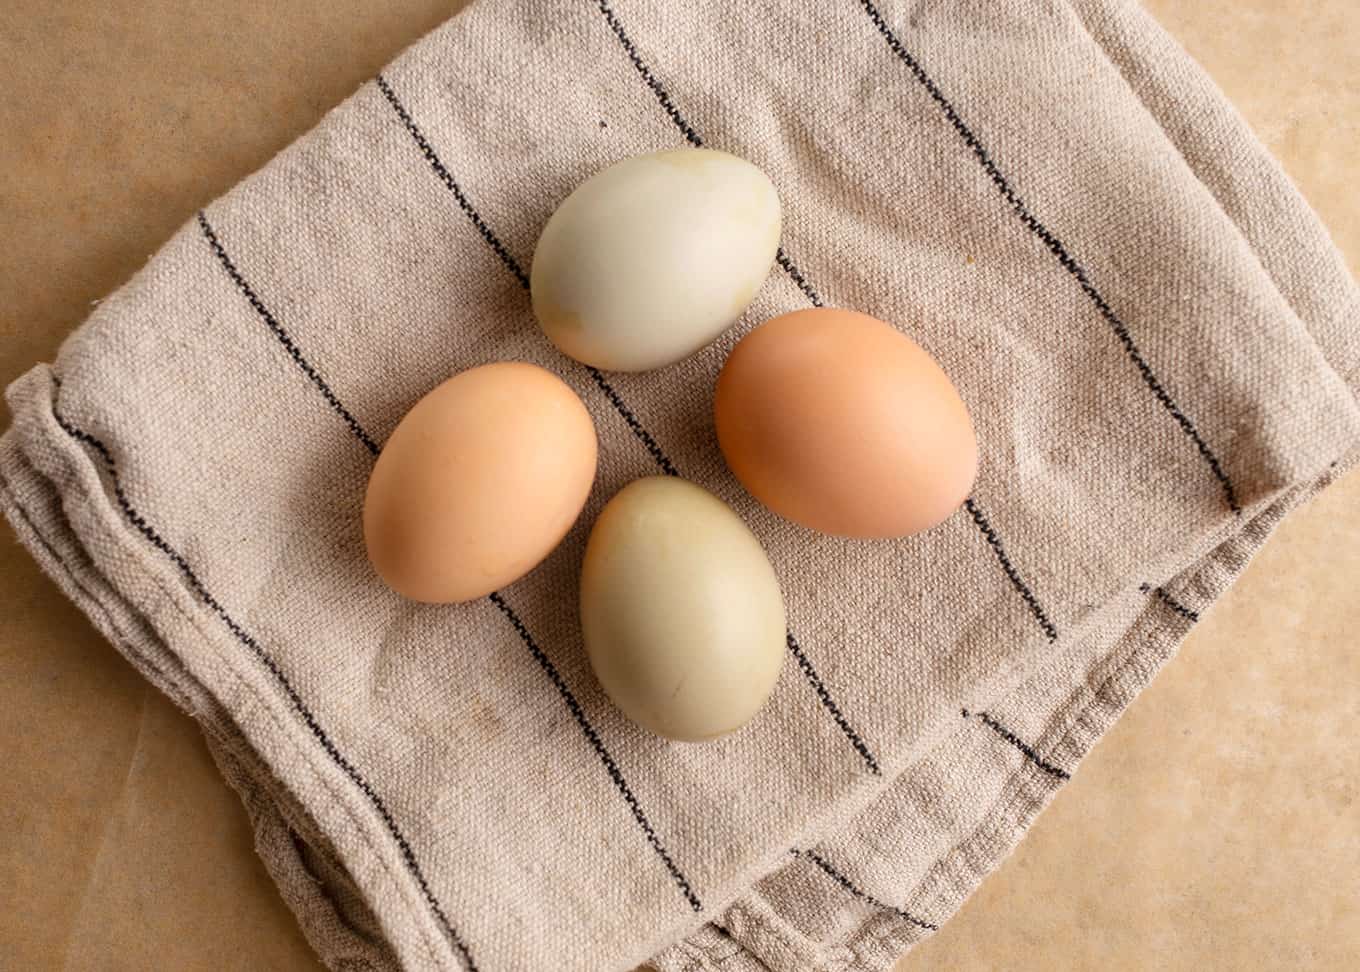 Four colorful farm fresh eggs on a linen towel